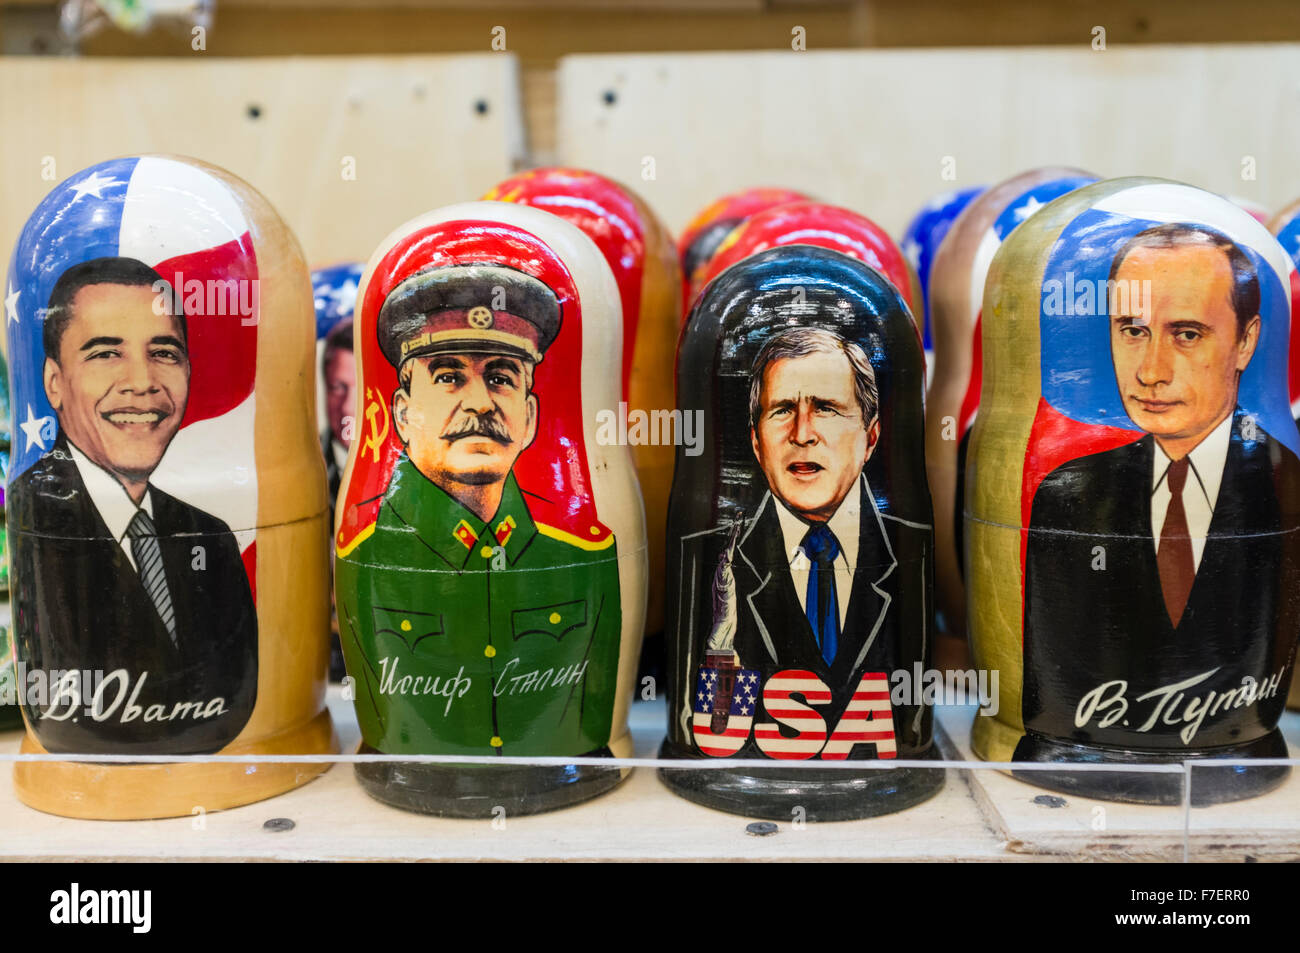 Several international politicians depicted in matryoshka form at a souvenirs shop in Tallinn, Estonia Stock Photo